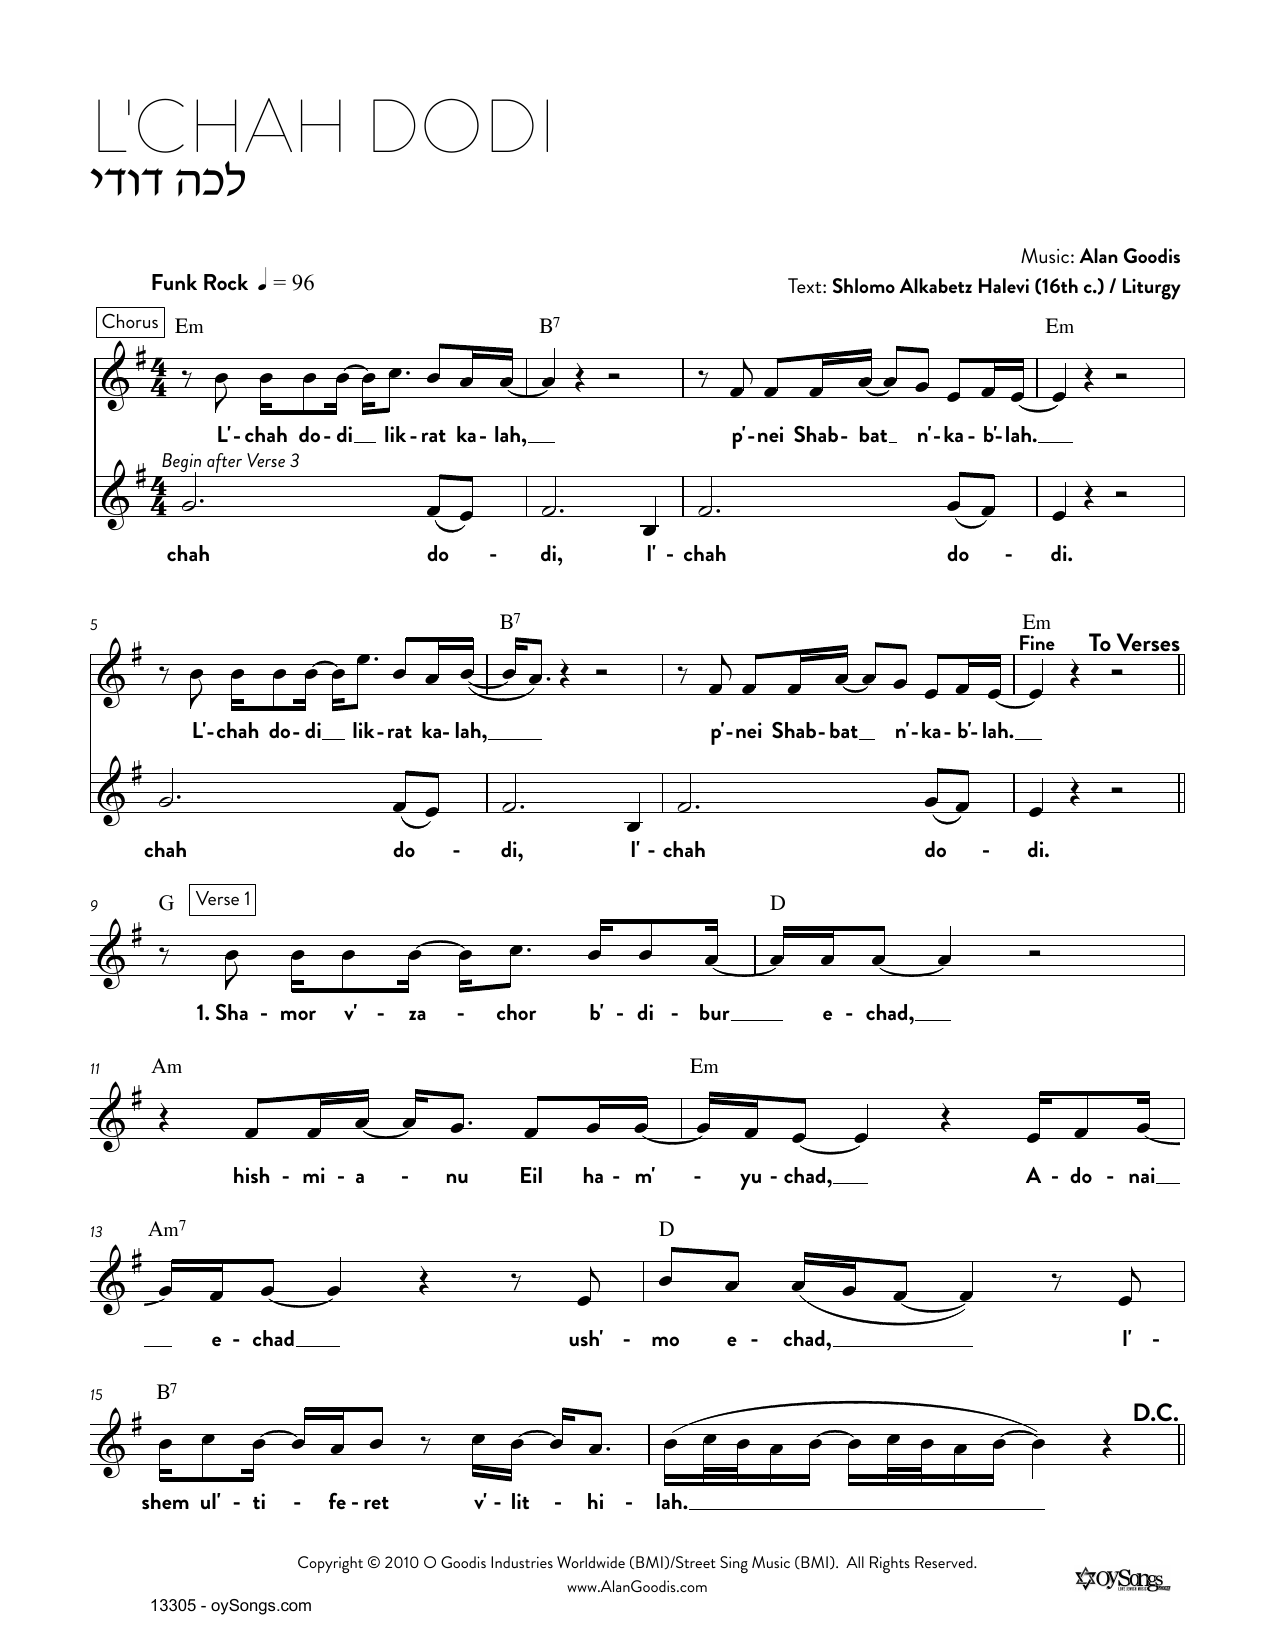 Alan Goodis L'chah Dodi Sheet Music Notes & Chords for Real Book – Melody, Lyrics & Chords - Download or Print PDF